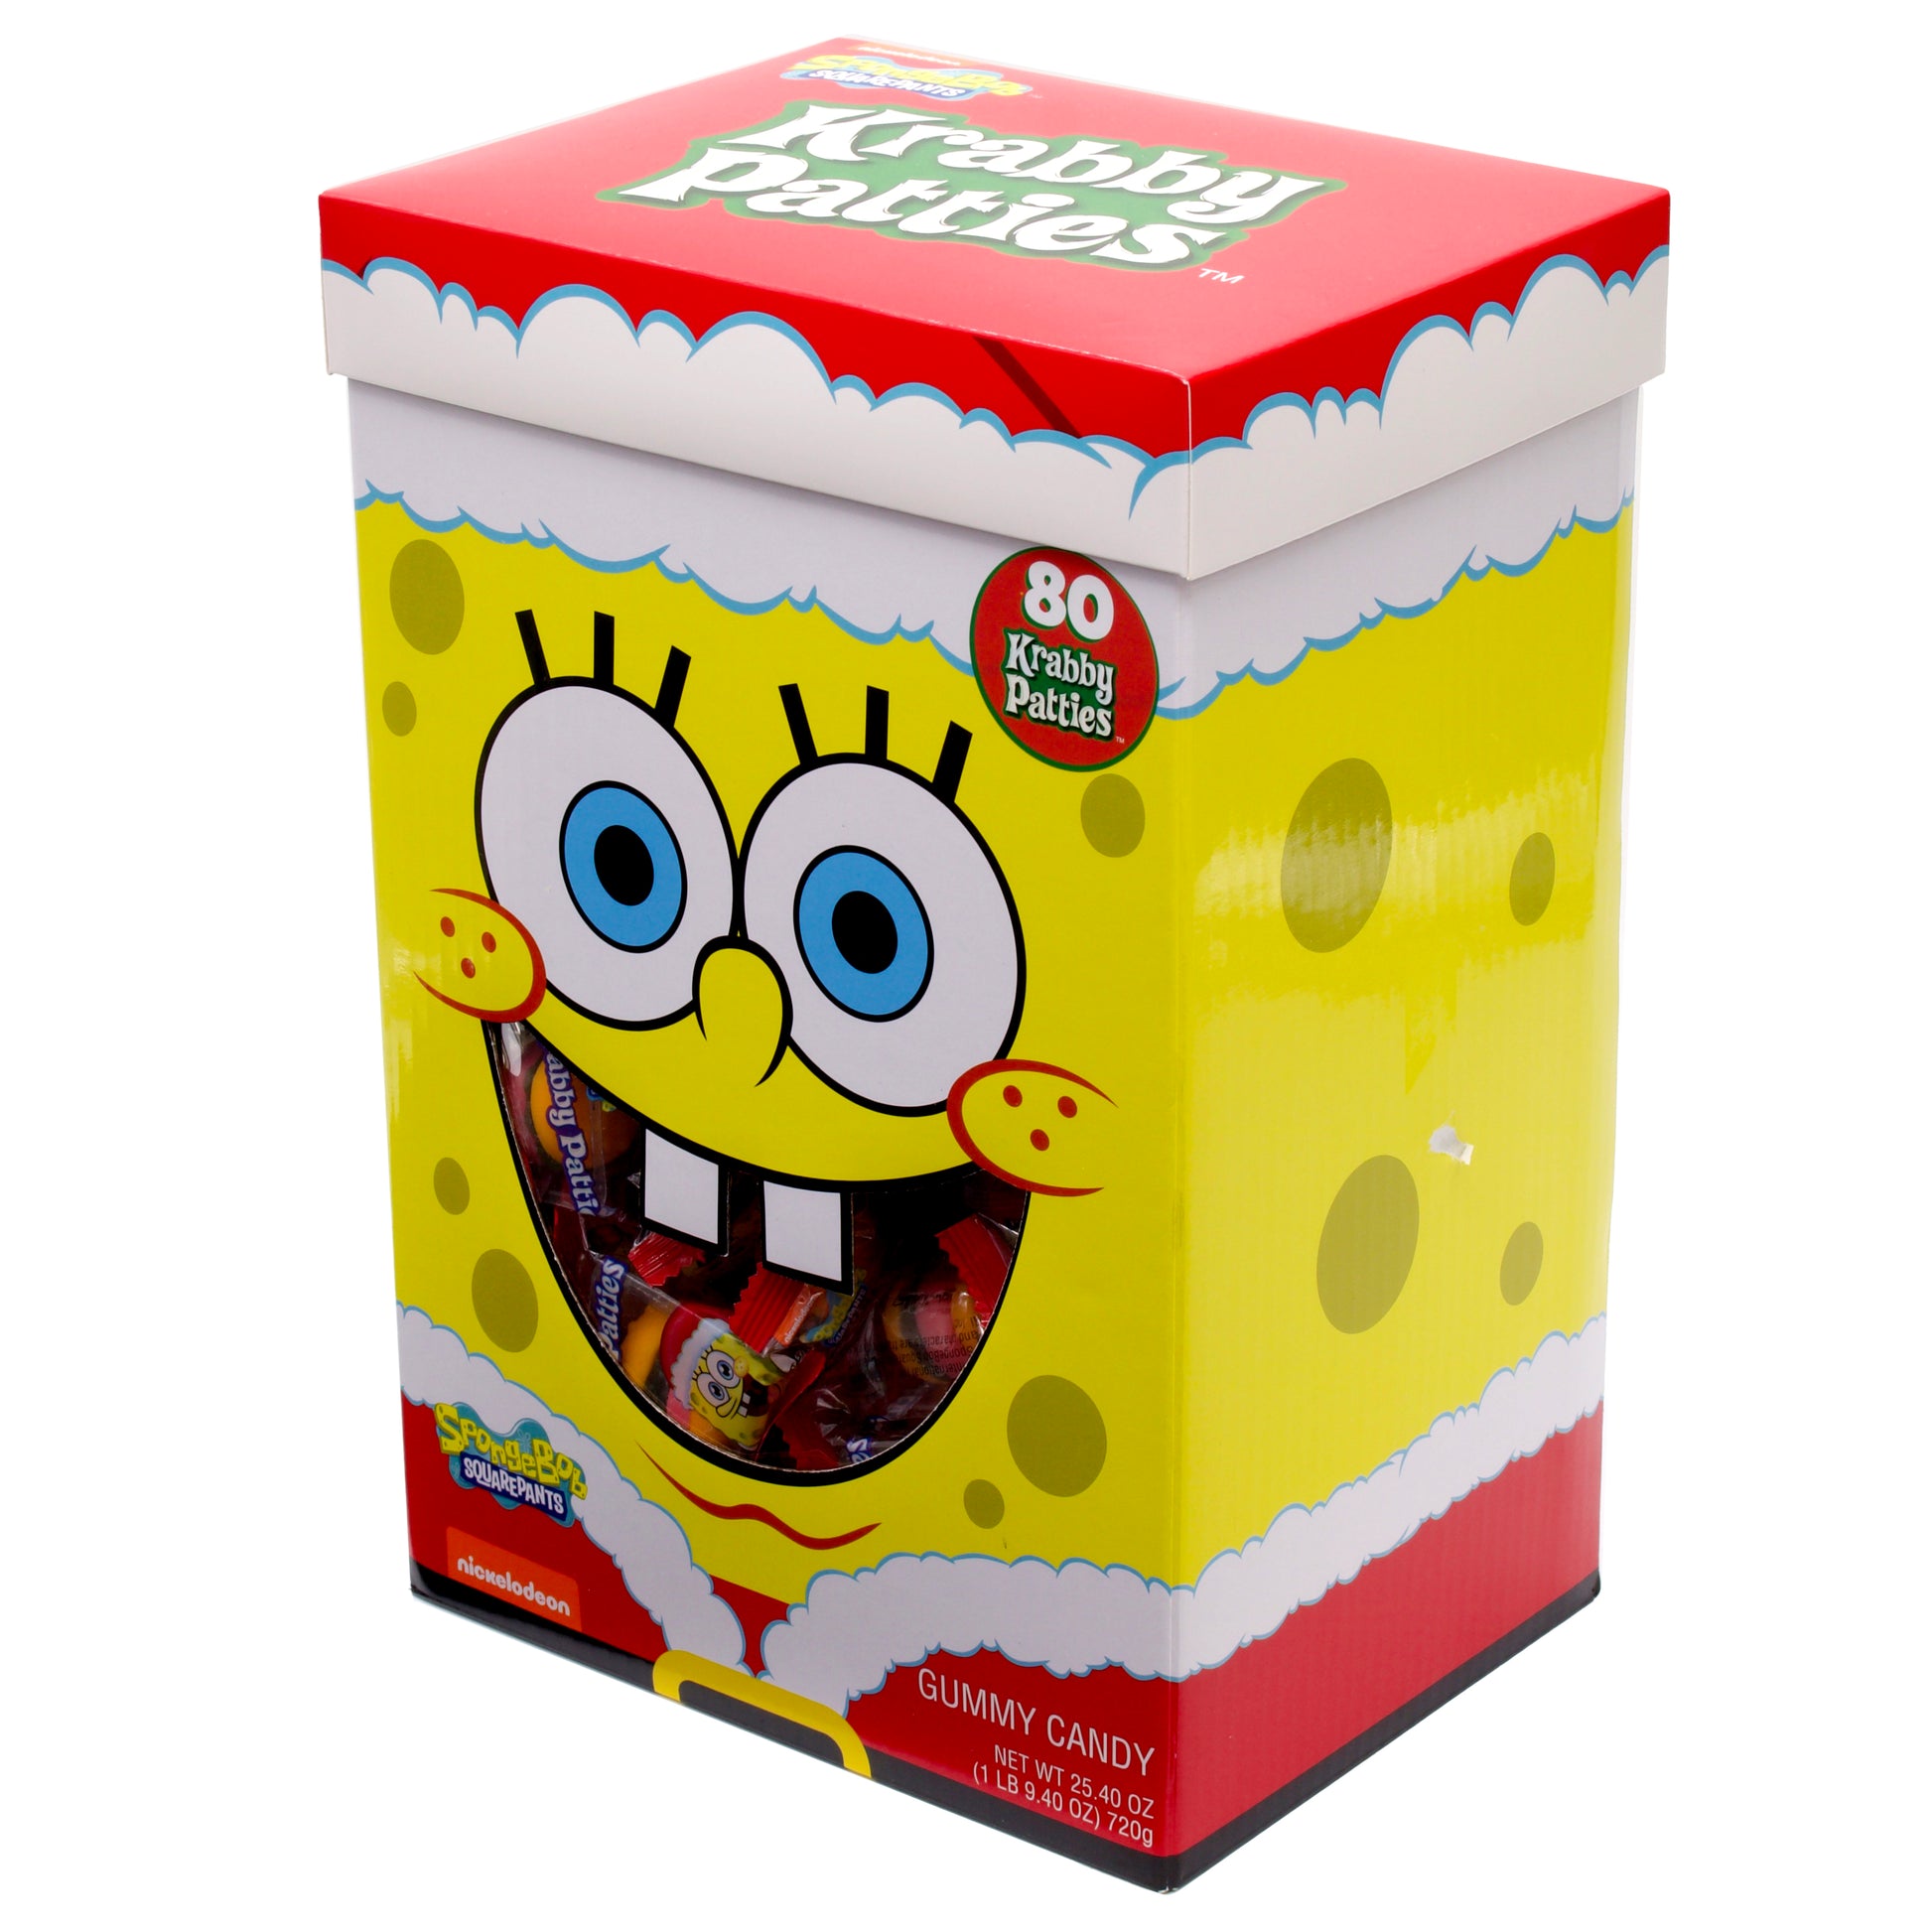 SpongeBob Kids' Dual Compartment Lunch Bag 1 ct